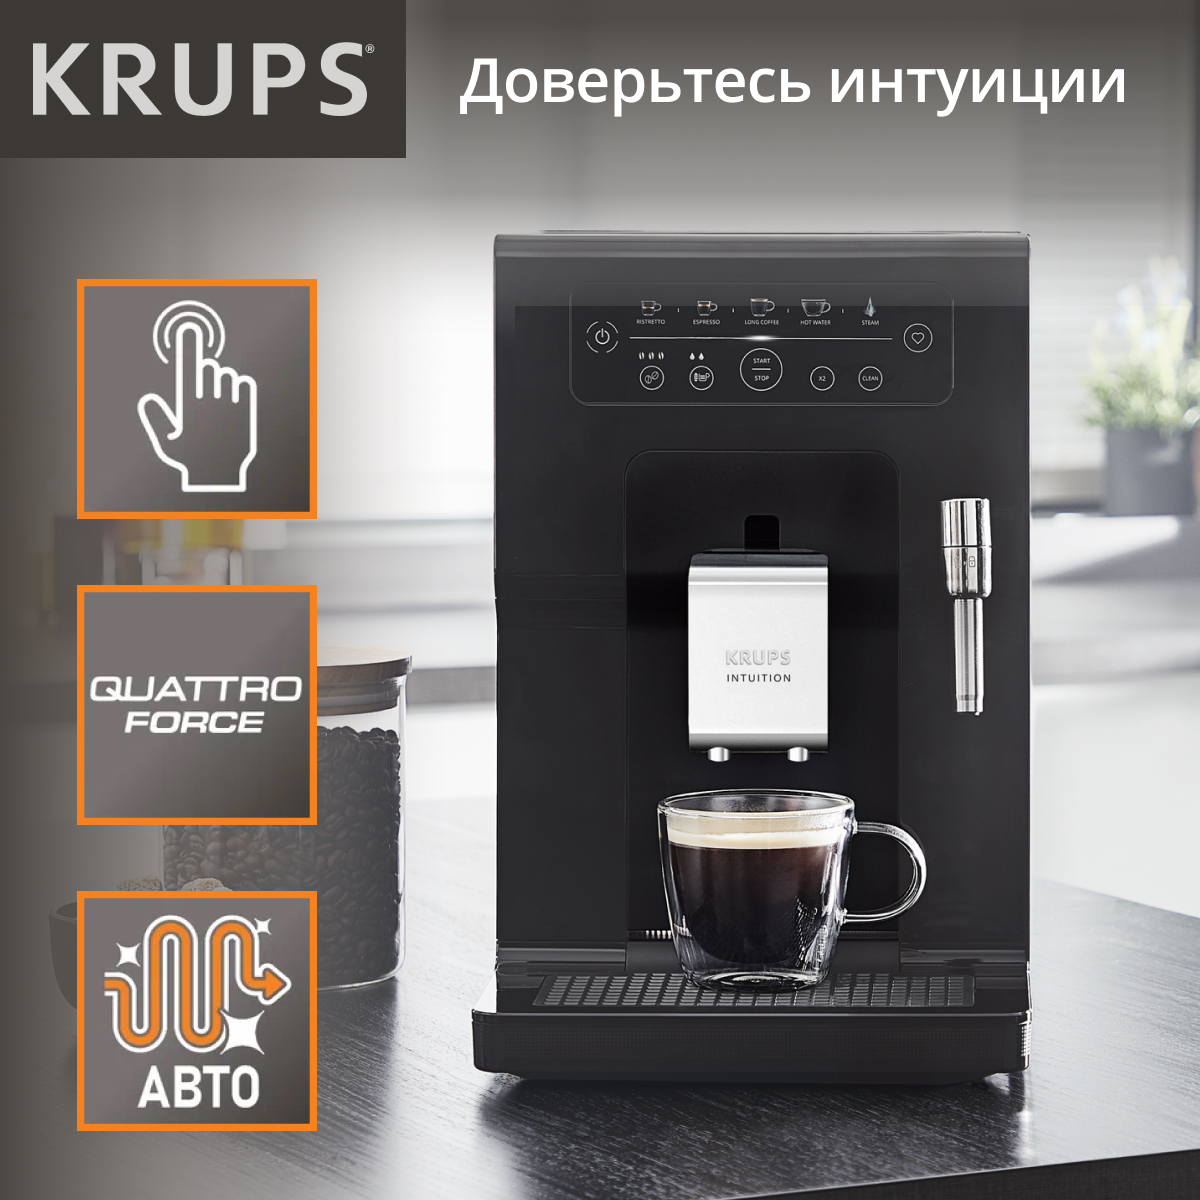 Автоматическая кофемашина Krups Intuition EA870810 Black вок wok tefal 28 intuition b8171944